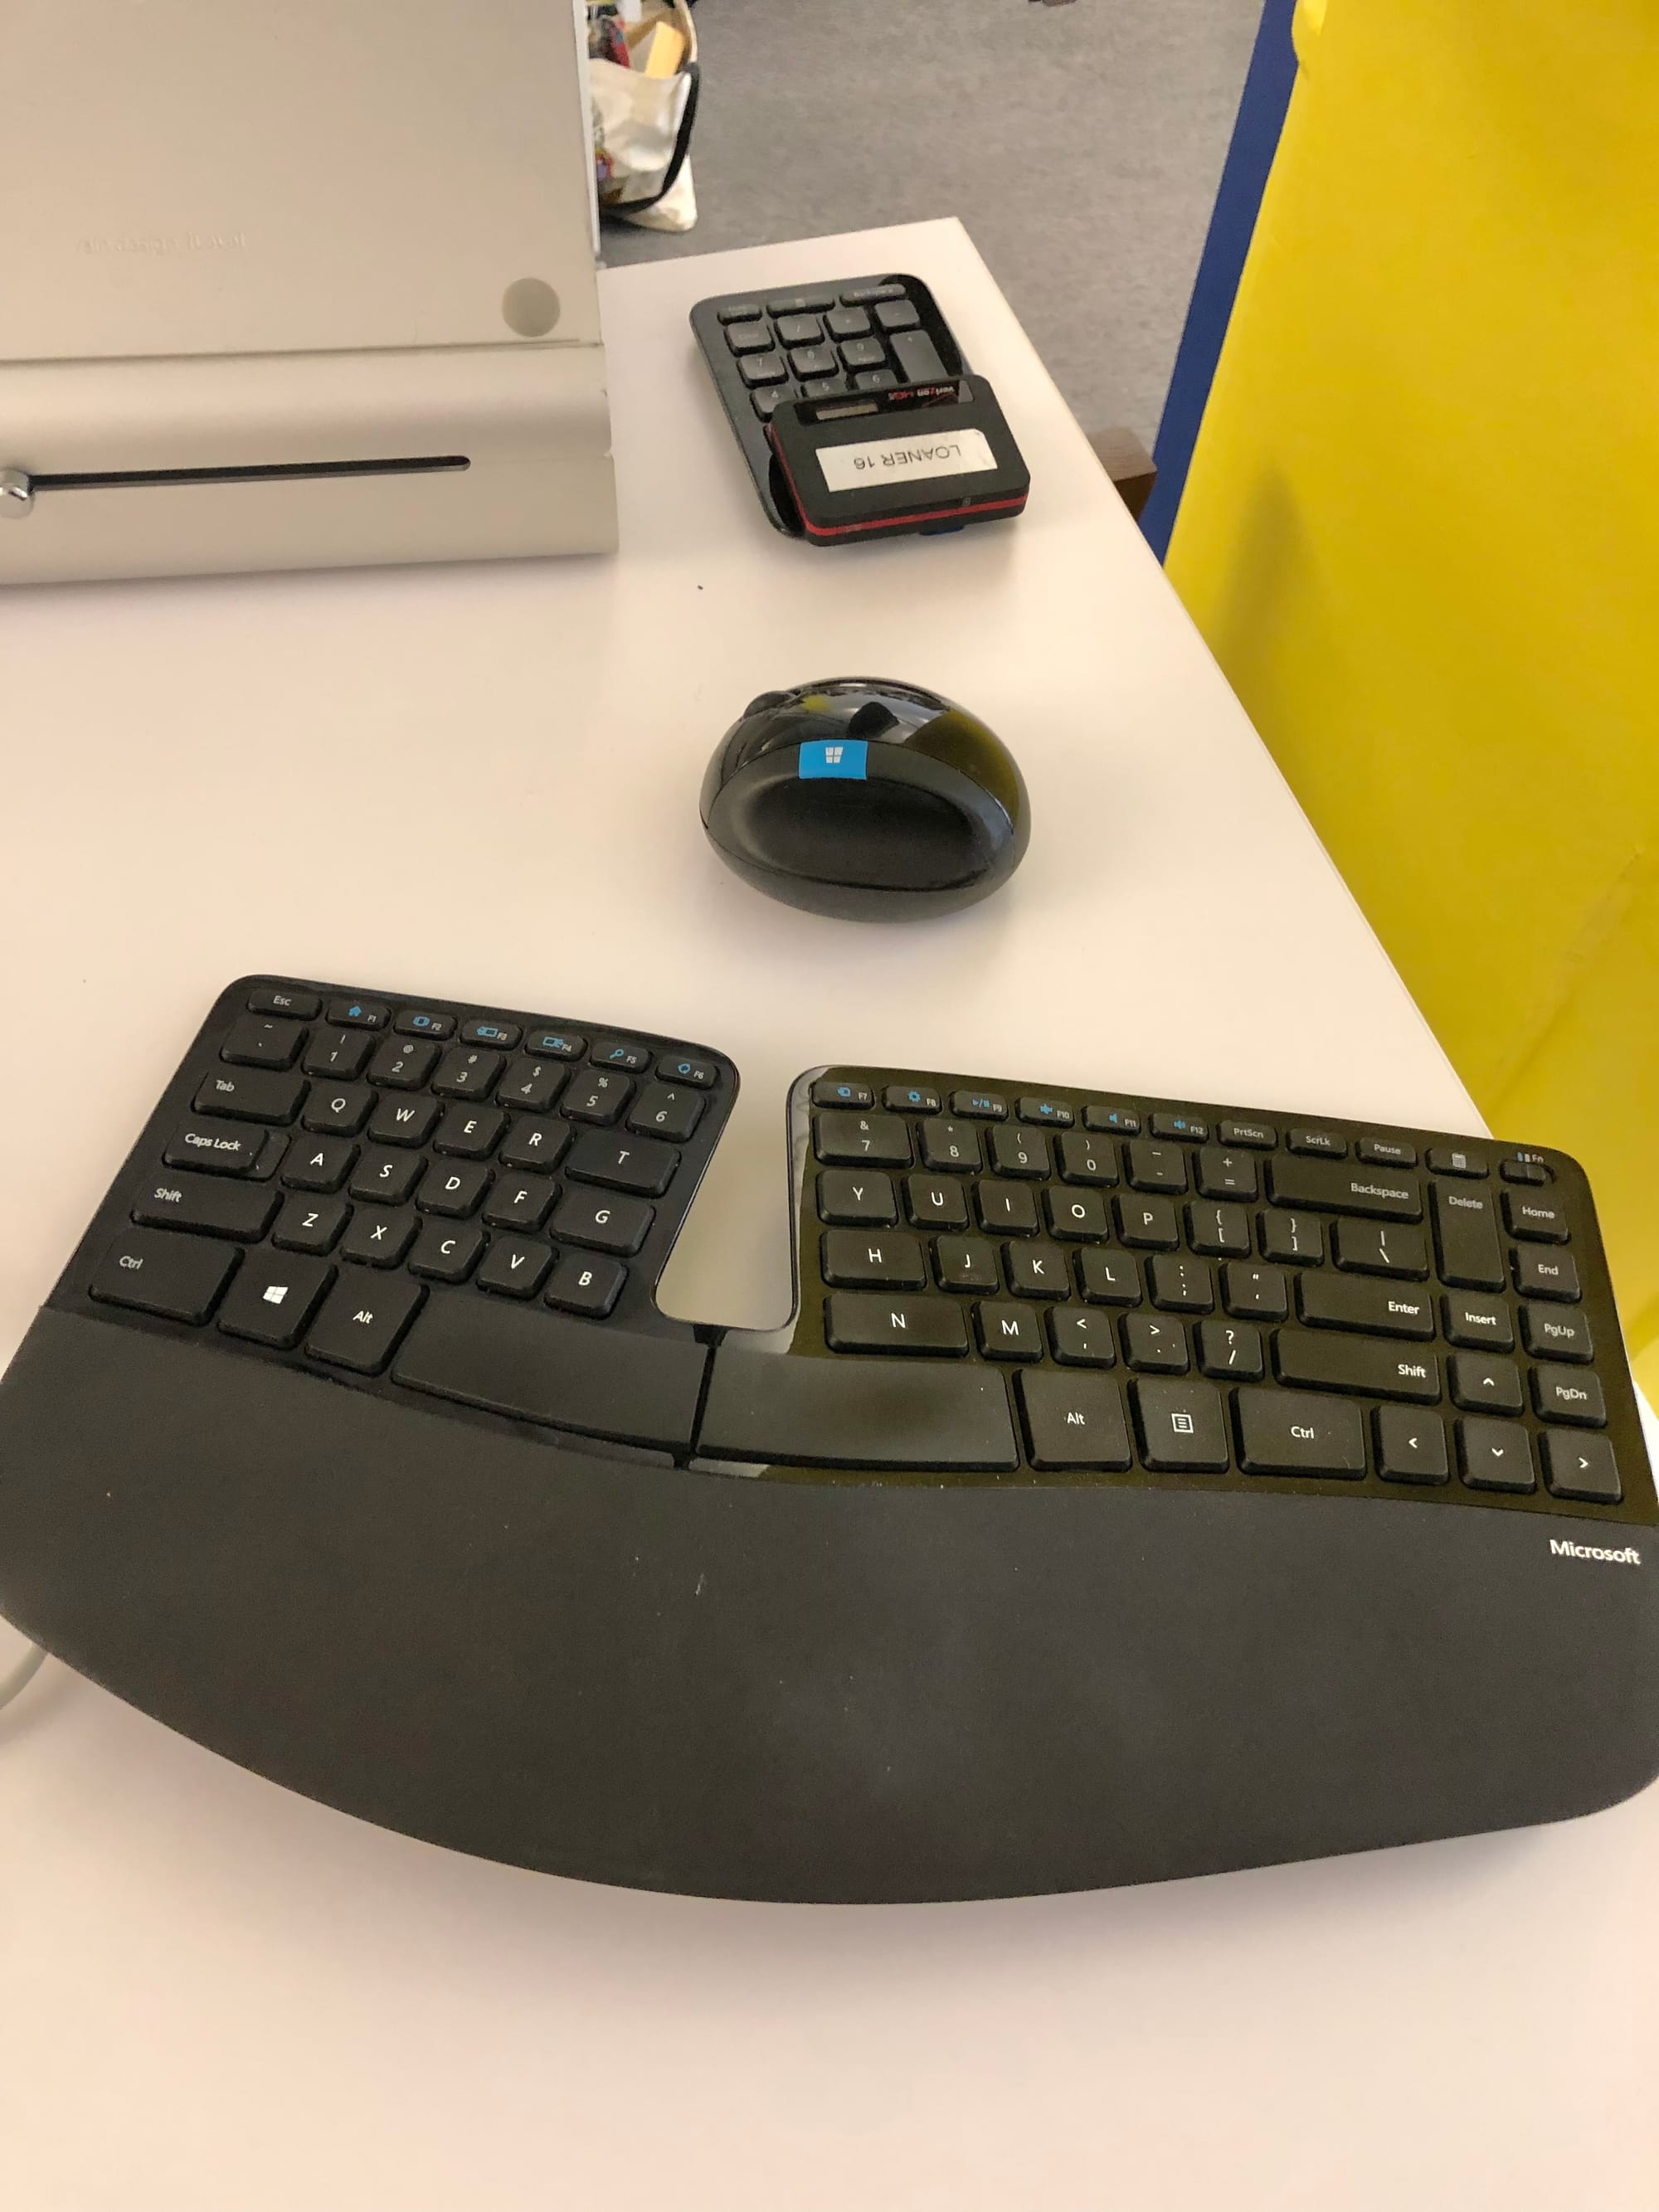 Same keyboard still going in 2019.